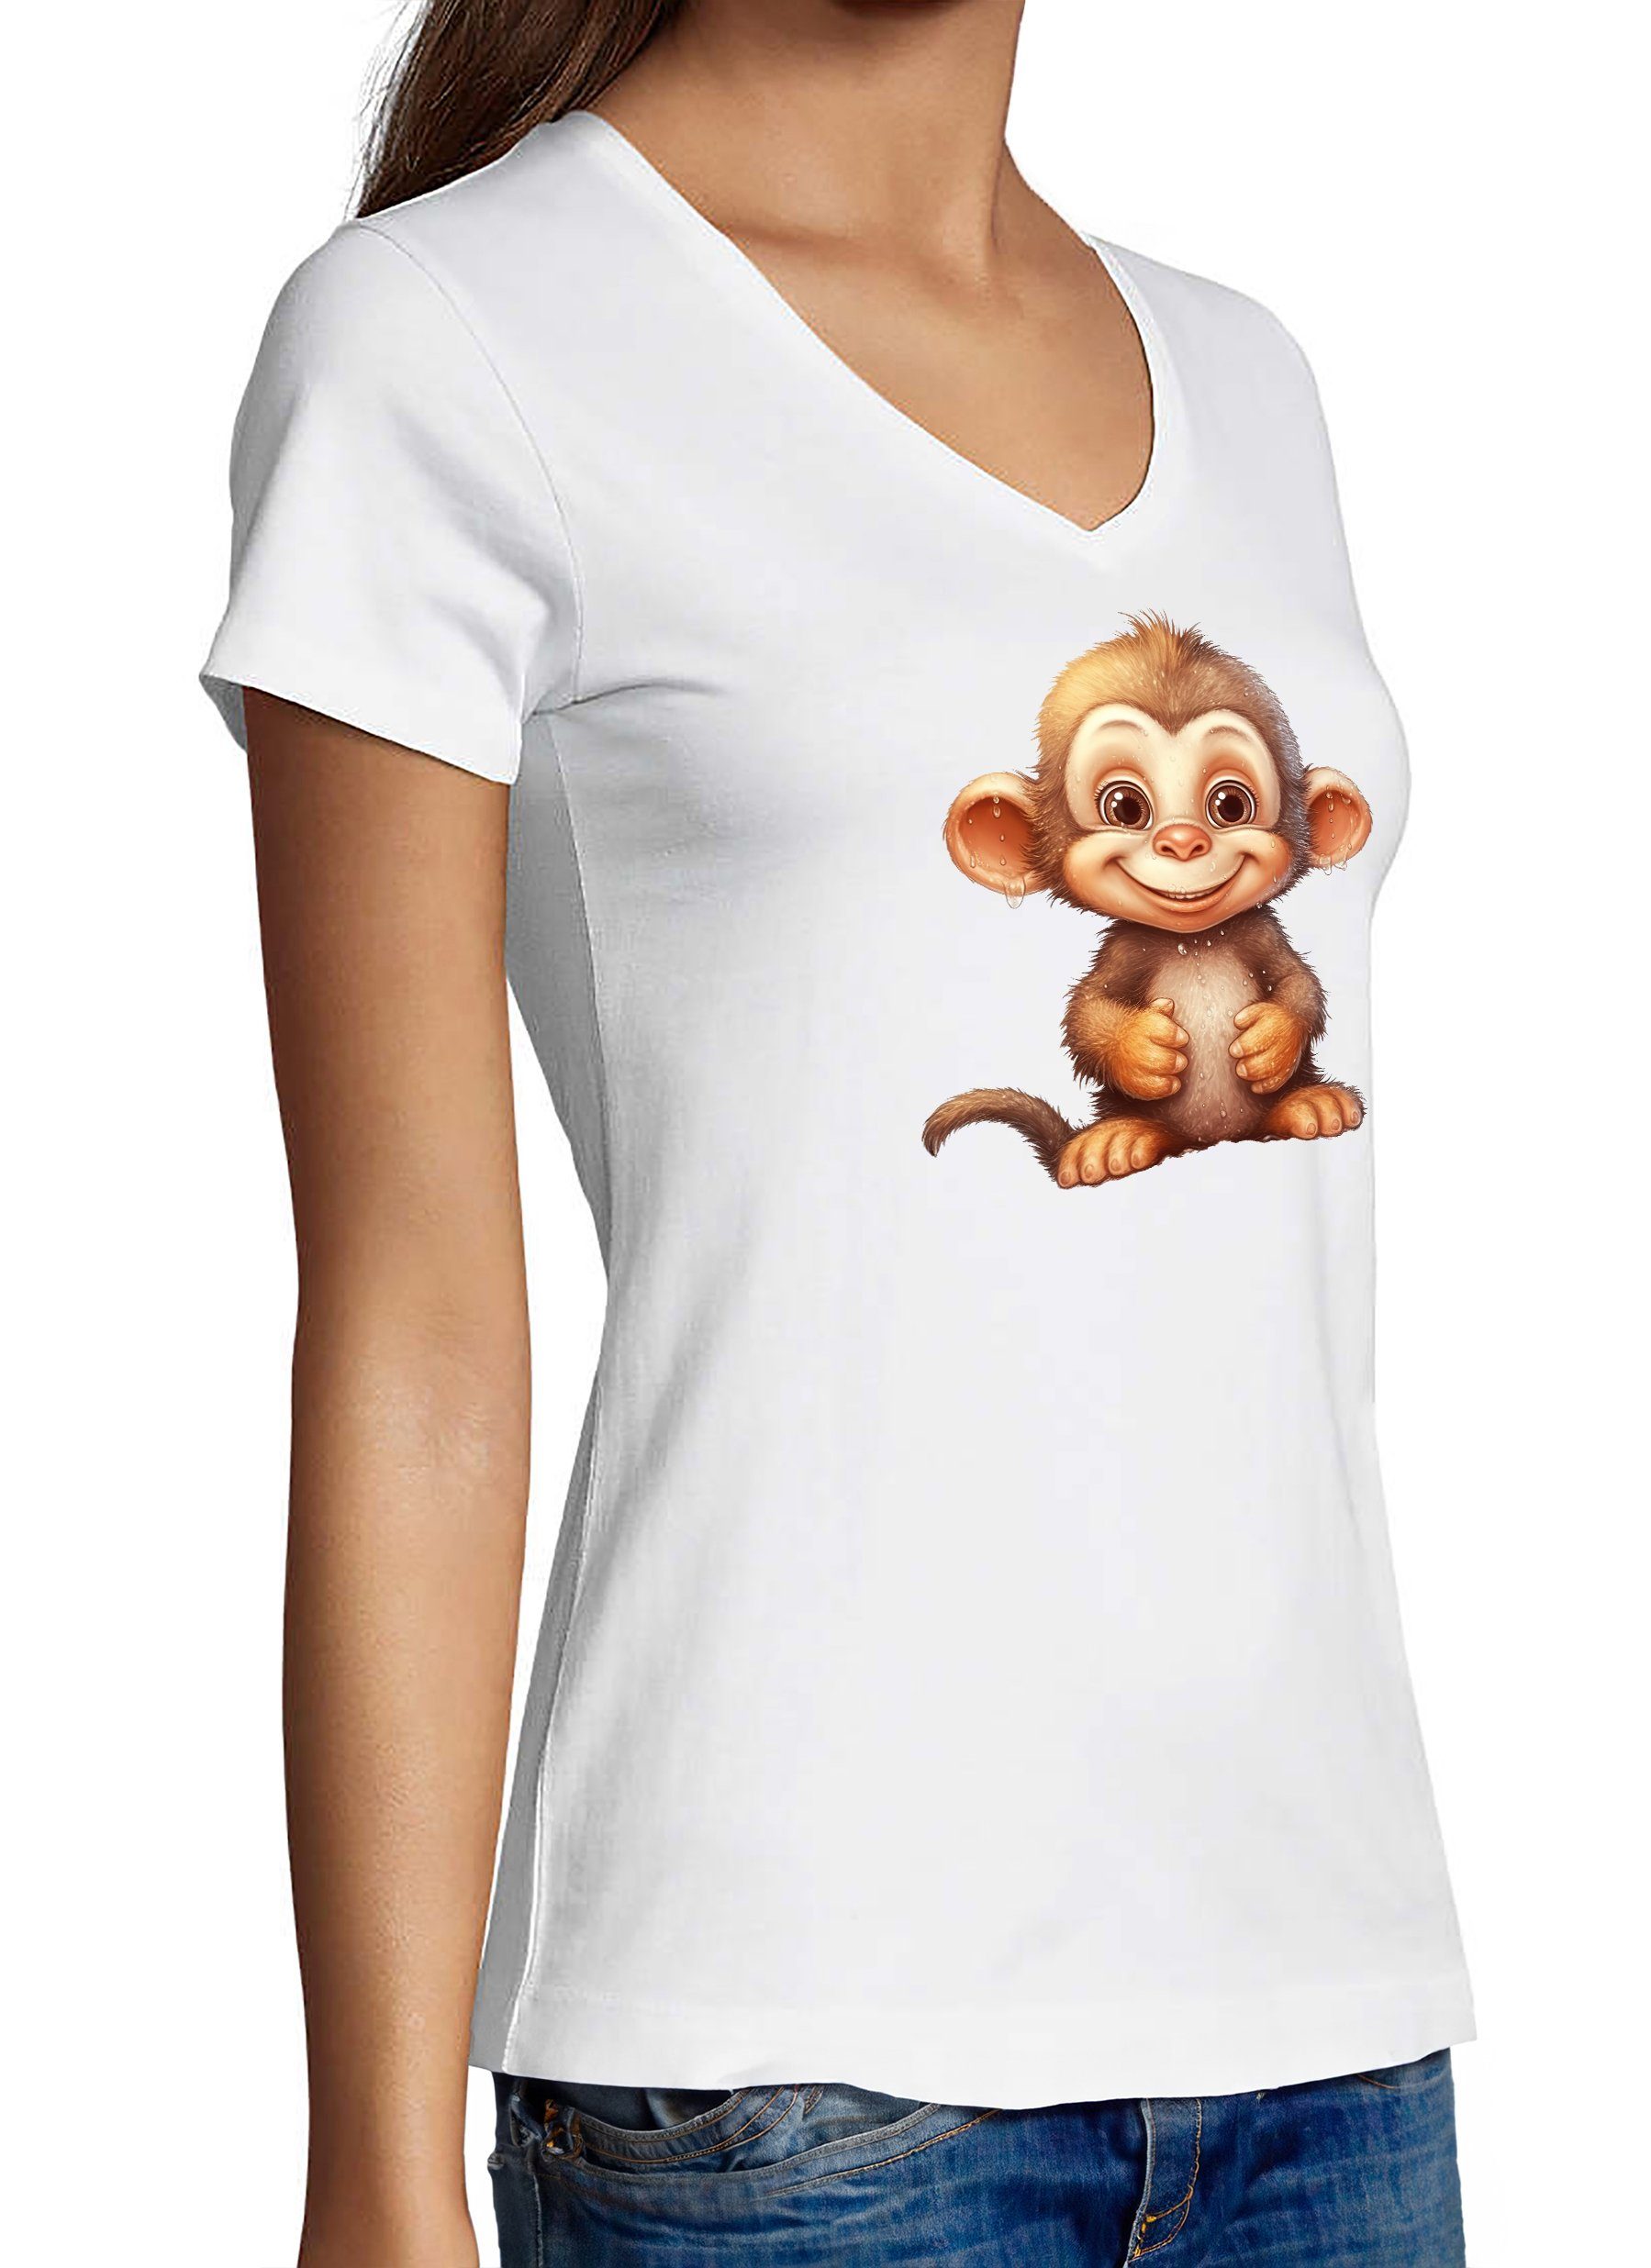 T-Shirt Affe - Fit Schimpanse MyDesign24 Aufdruck Damen Slim Shirt Baby Print mit V-Ausschnitt weiss Wildtier Baumwollshirt